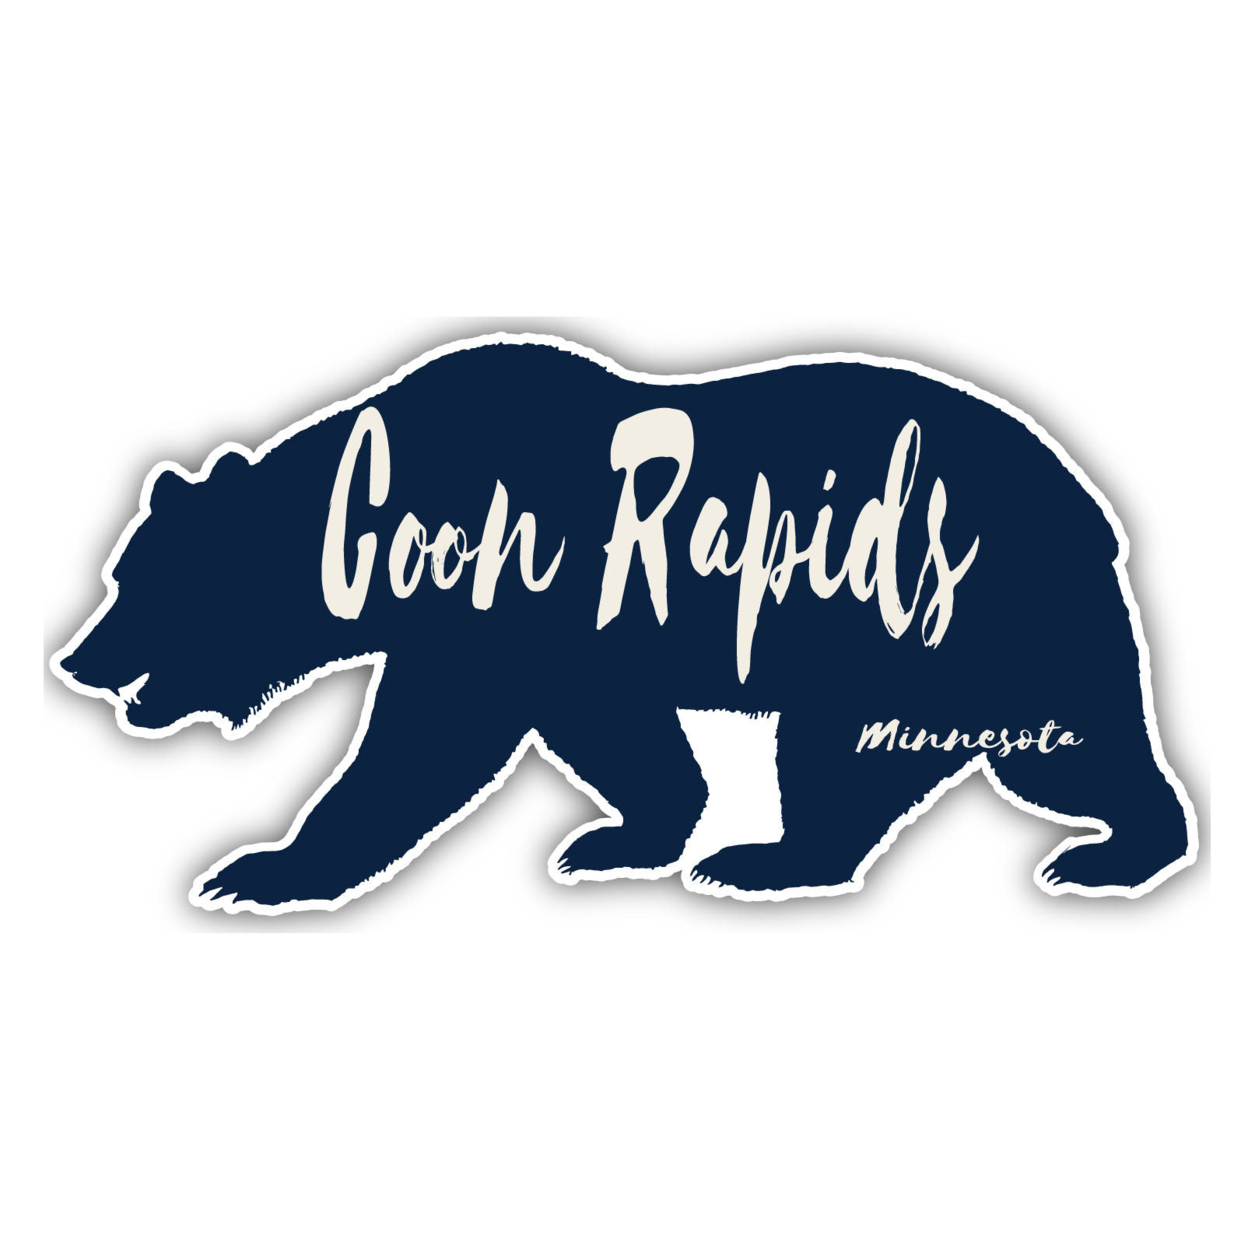 Coon Rapids Minnesota Souvenir Decorative Stickers (Choose Theme And Size) - Single Unit, 10-Inch, Bear